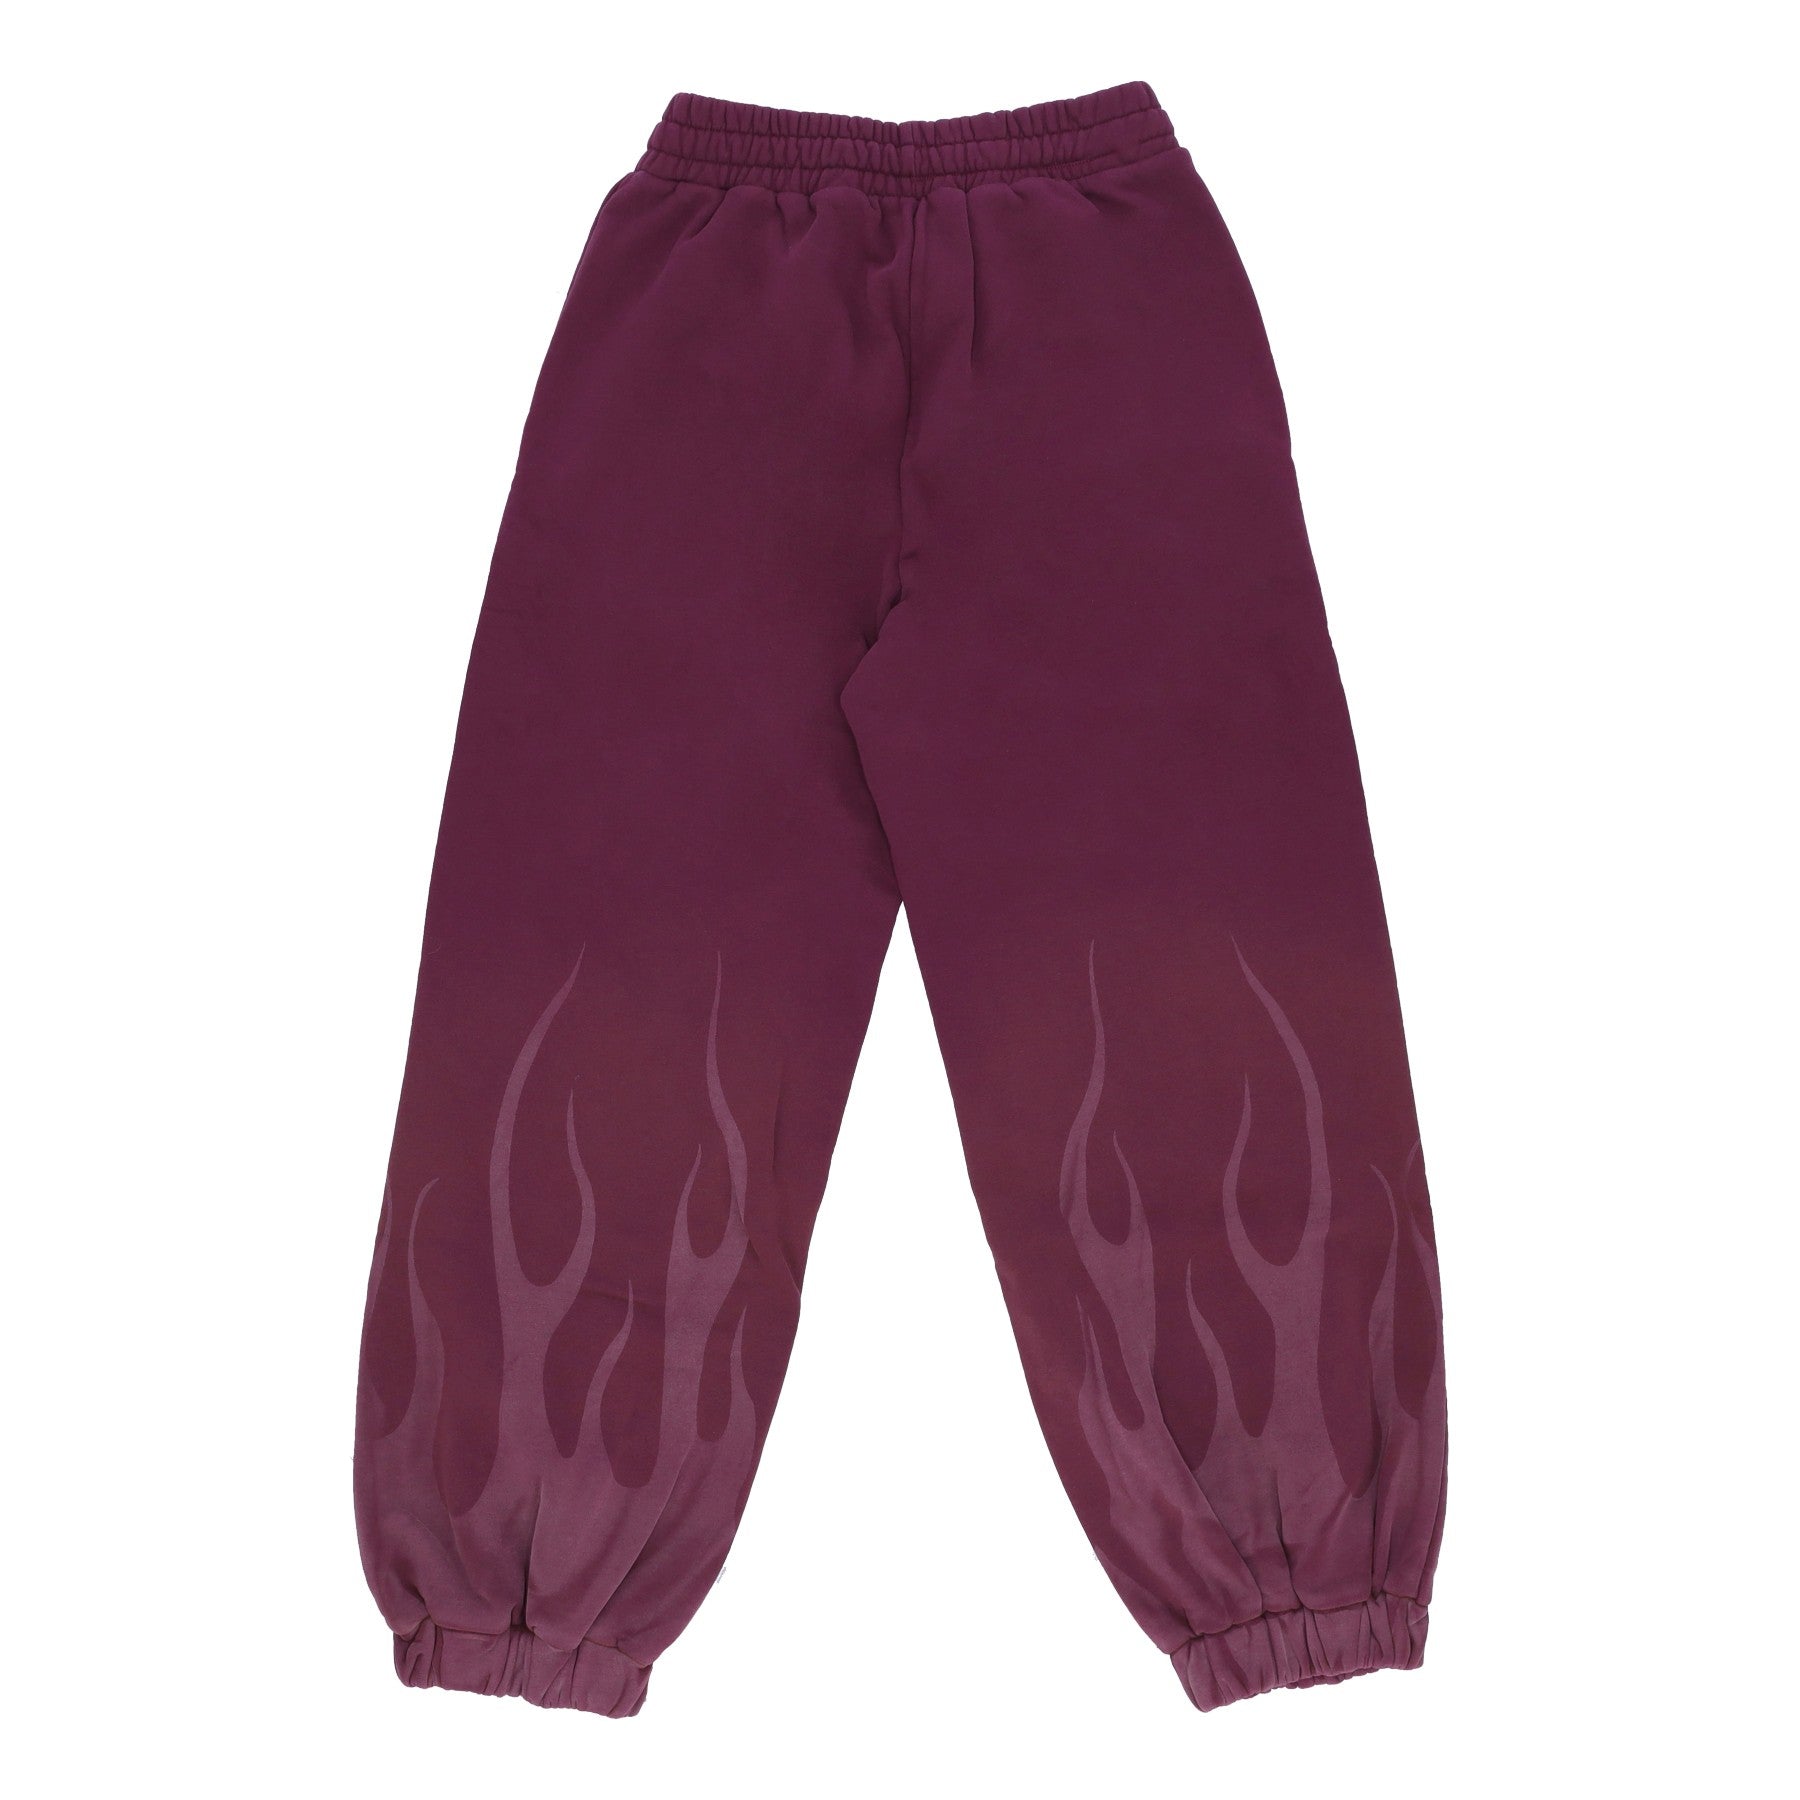 Women's Fleece Tracksuit Pants Corrosive Flames Pants Grape Wine